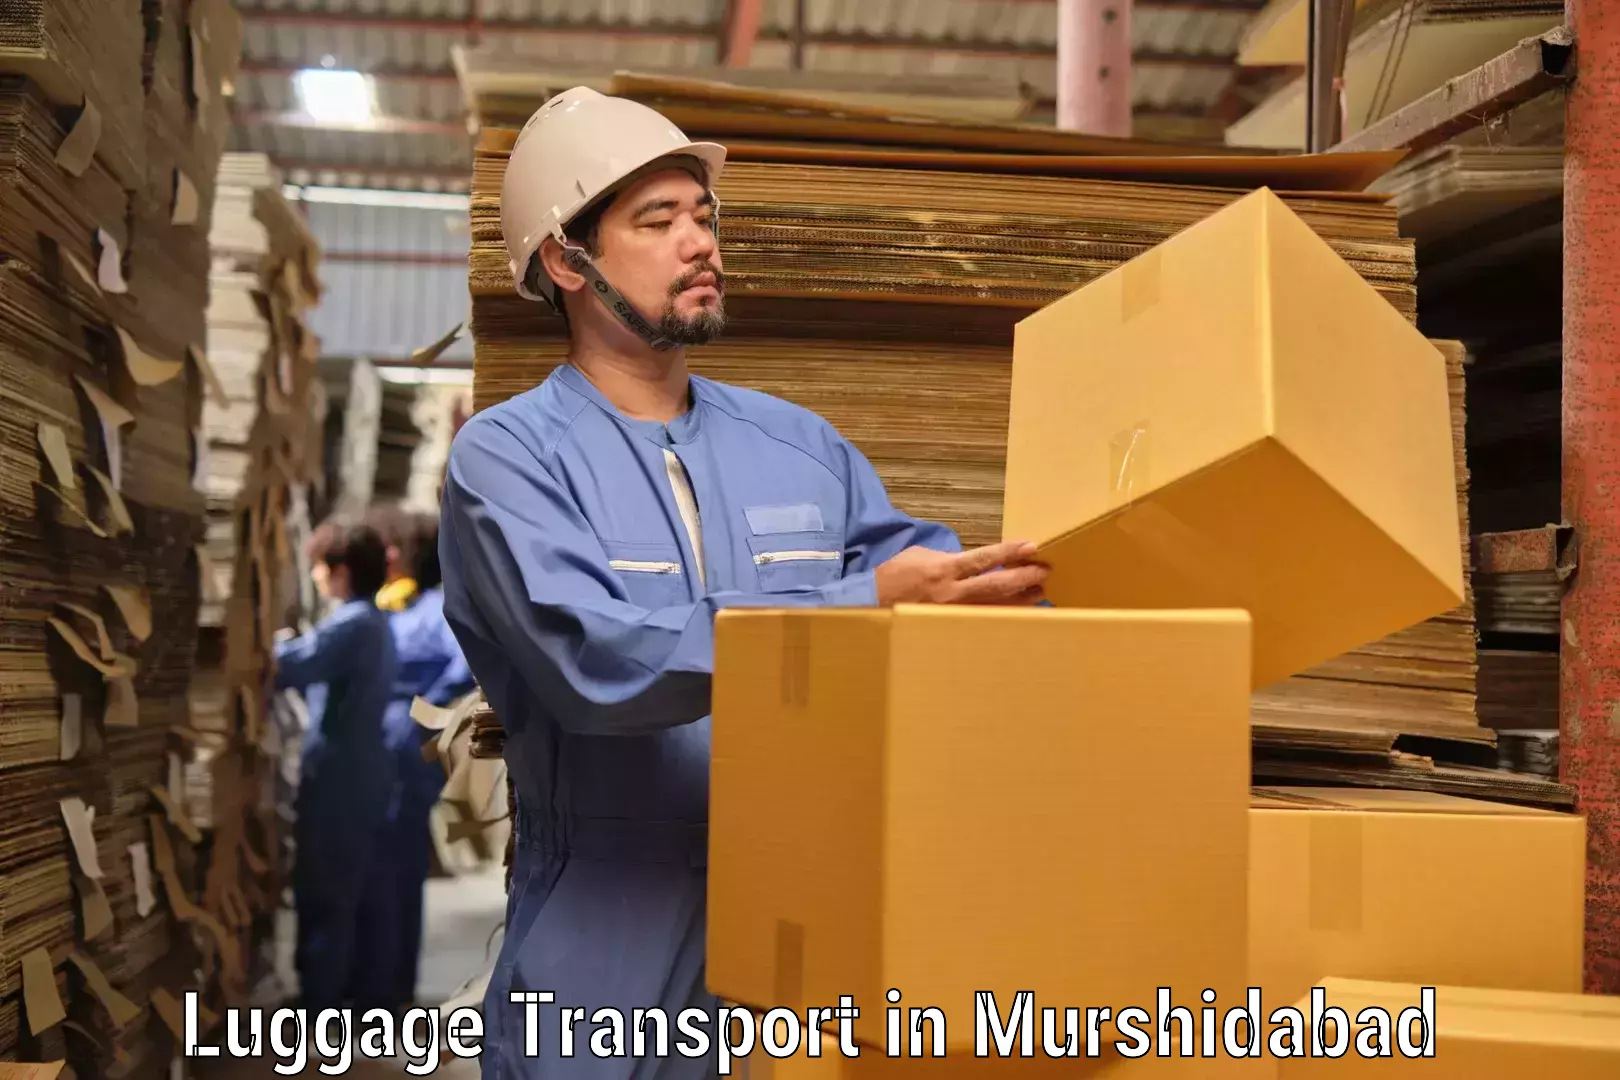 Luggage transport consultancy in Murshidabad